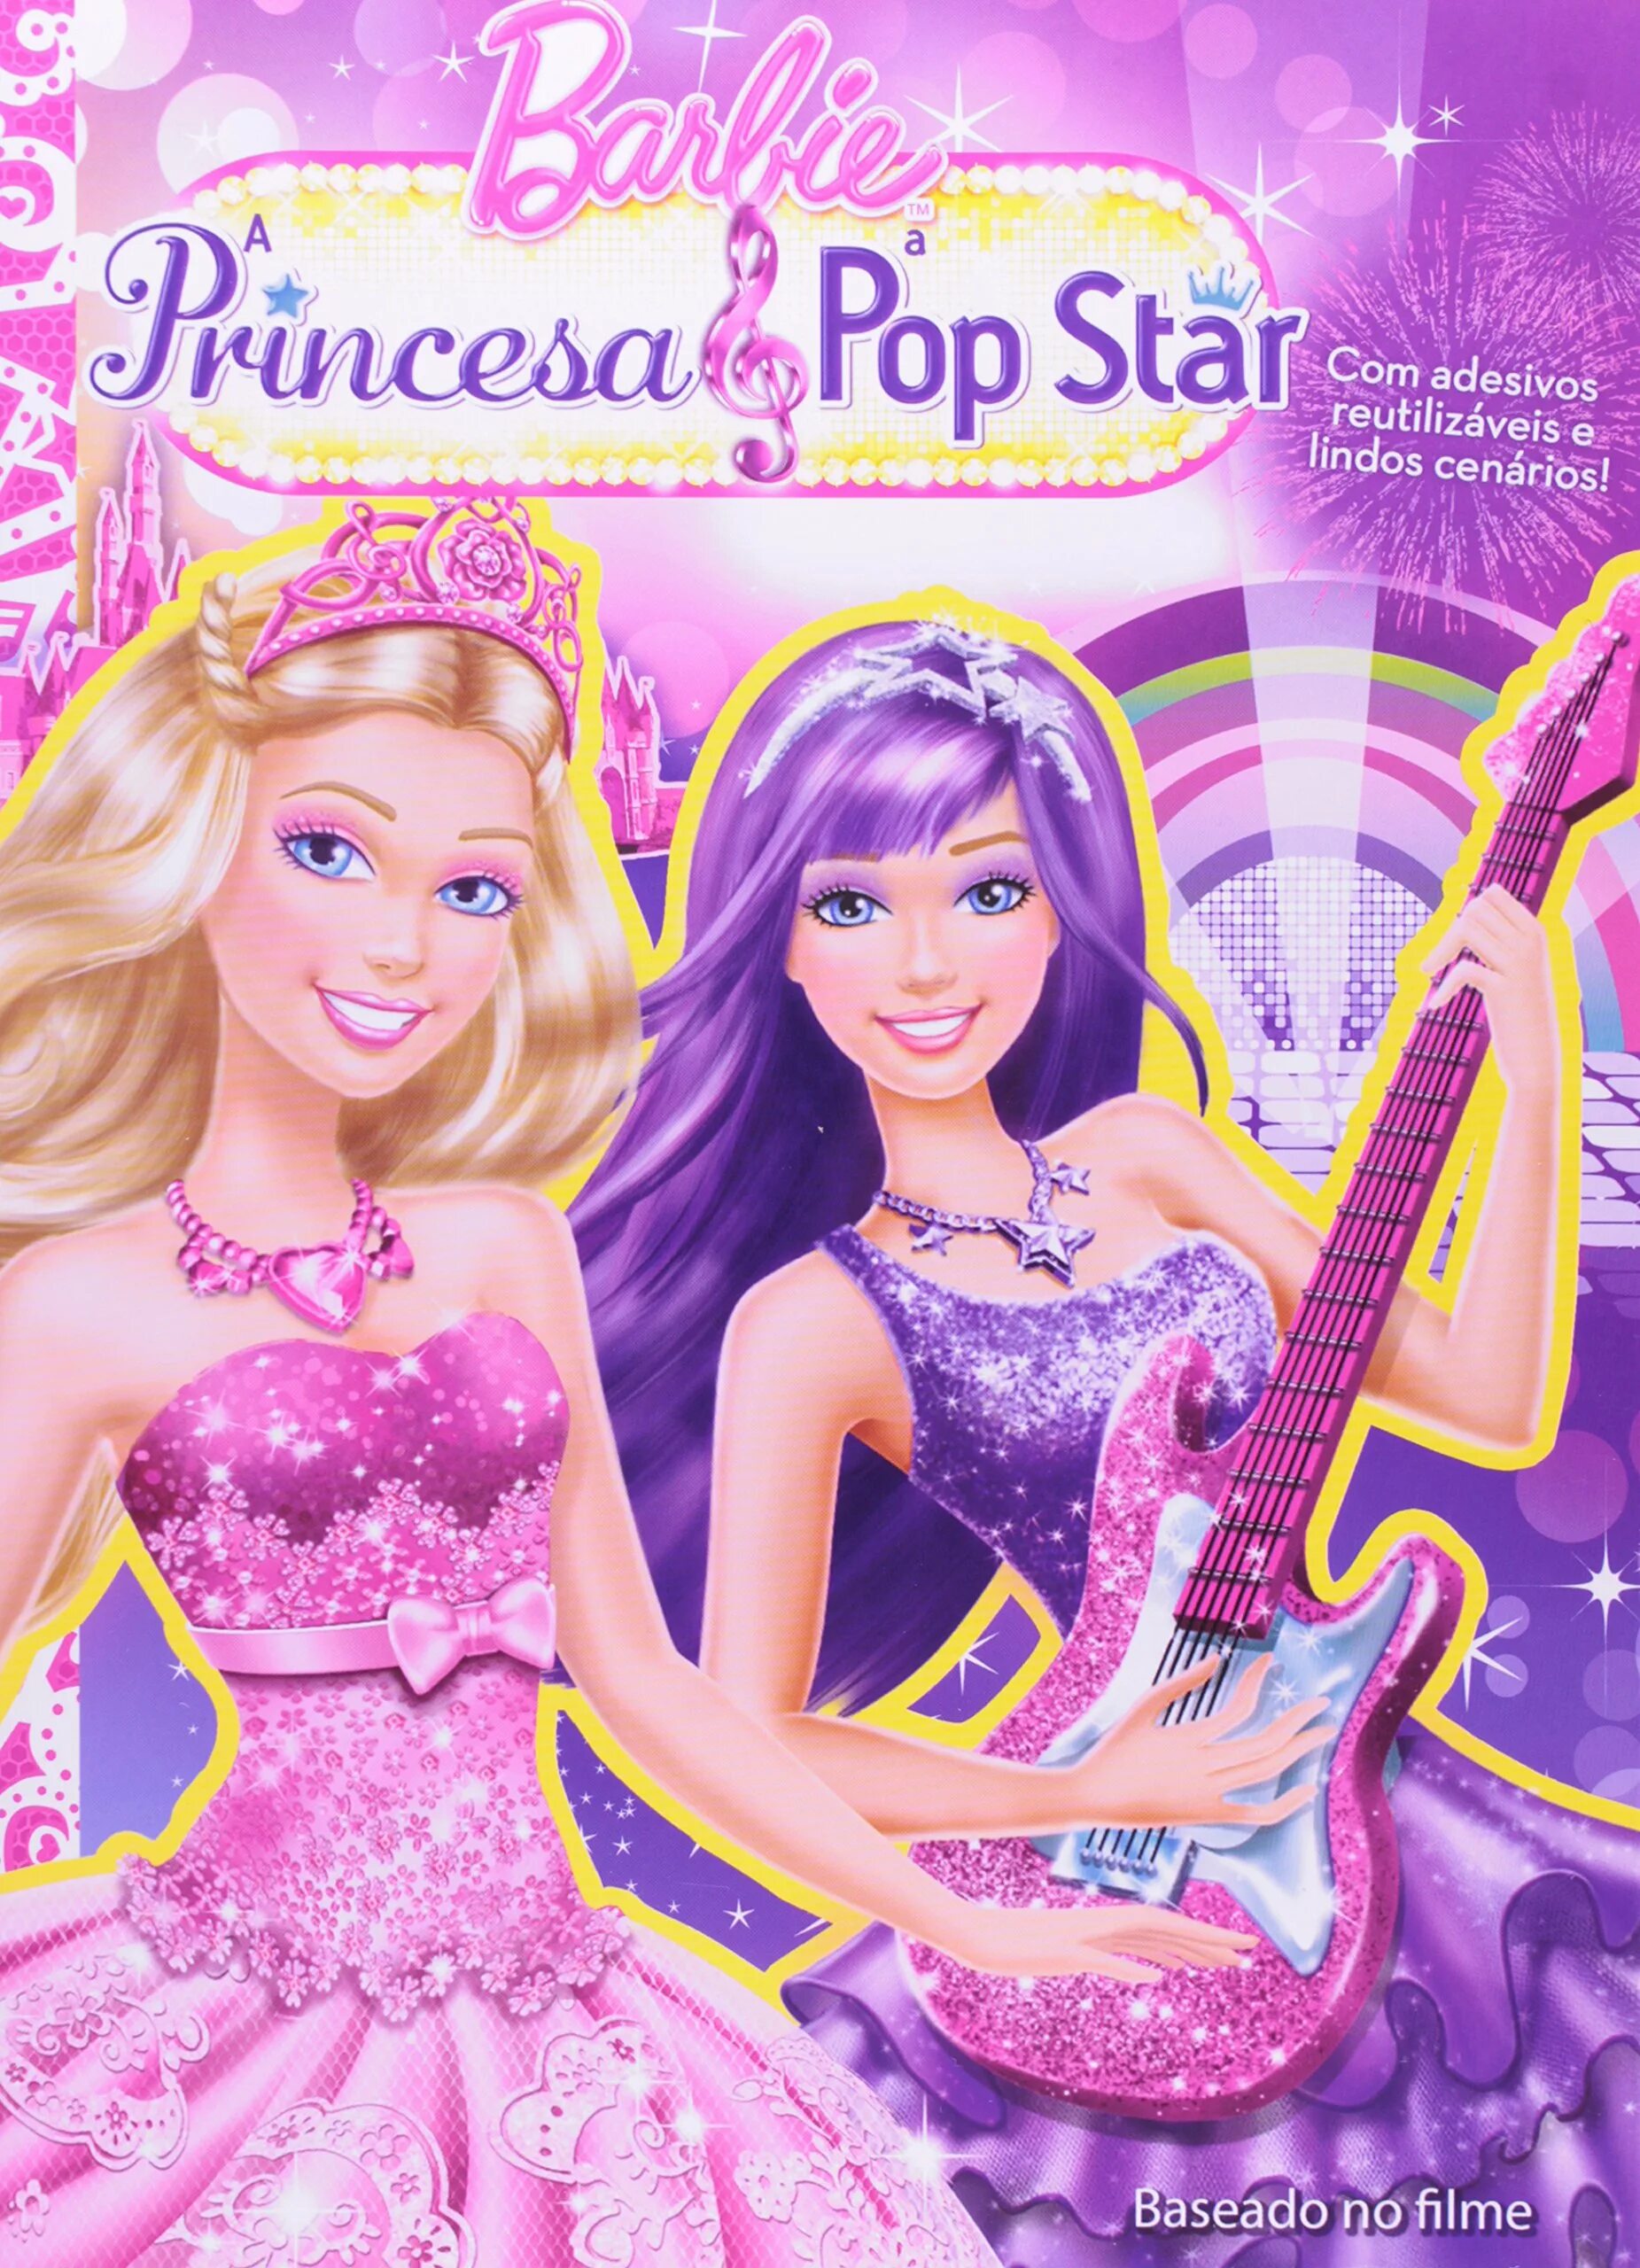 Принцесса и поп звезда. Барби. Принцесса и поп-звезда. Барби: принцесса и поп-звезда мультфильм 2012. Барби звезда и принцесса. Барби принцесса Постер.